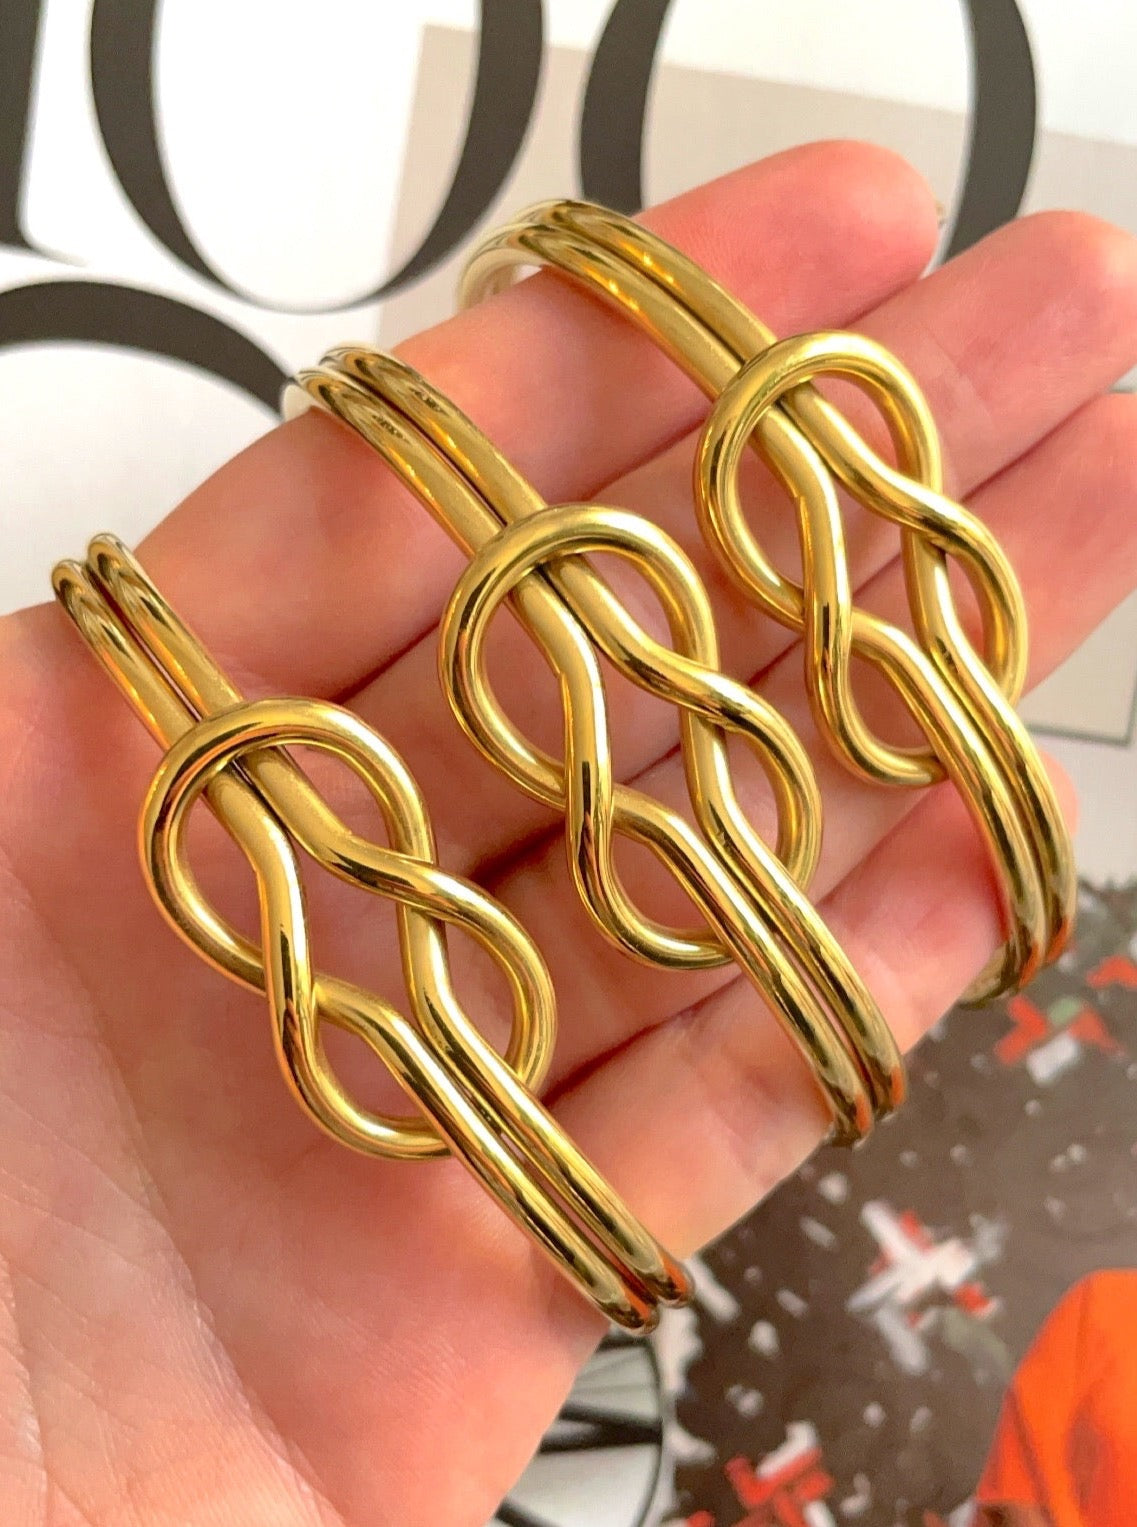 Golden knotted cuffs